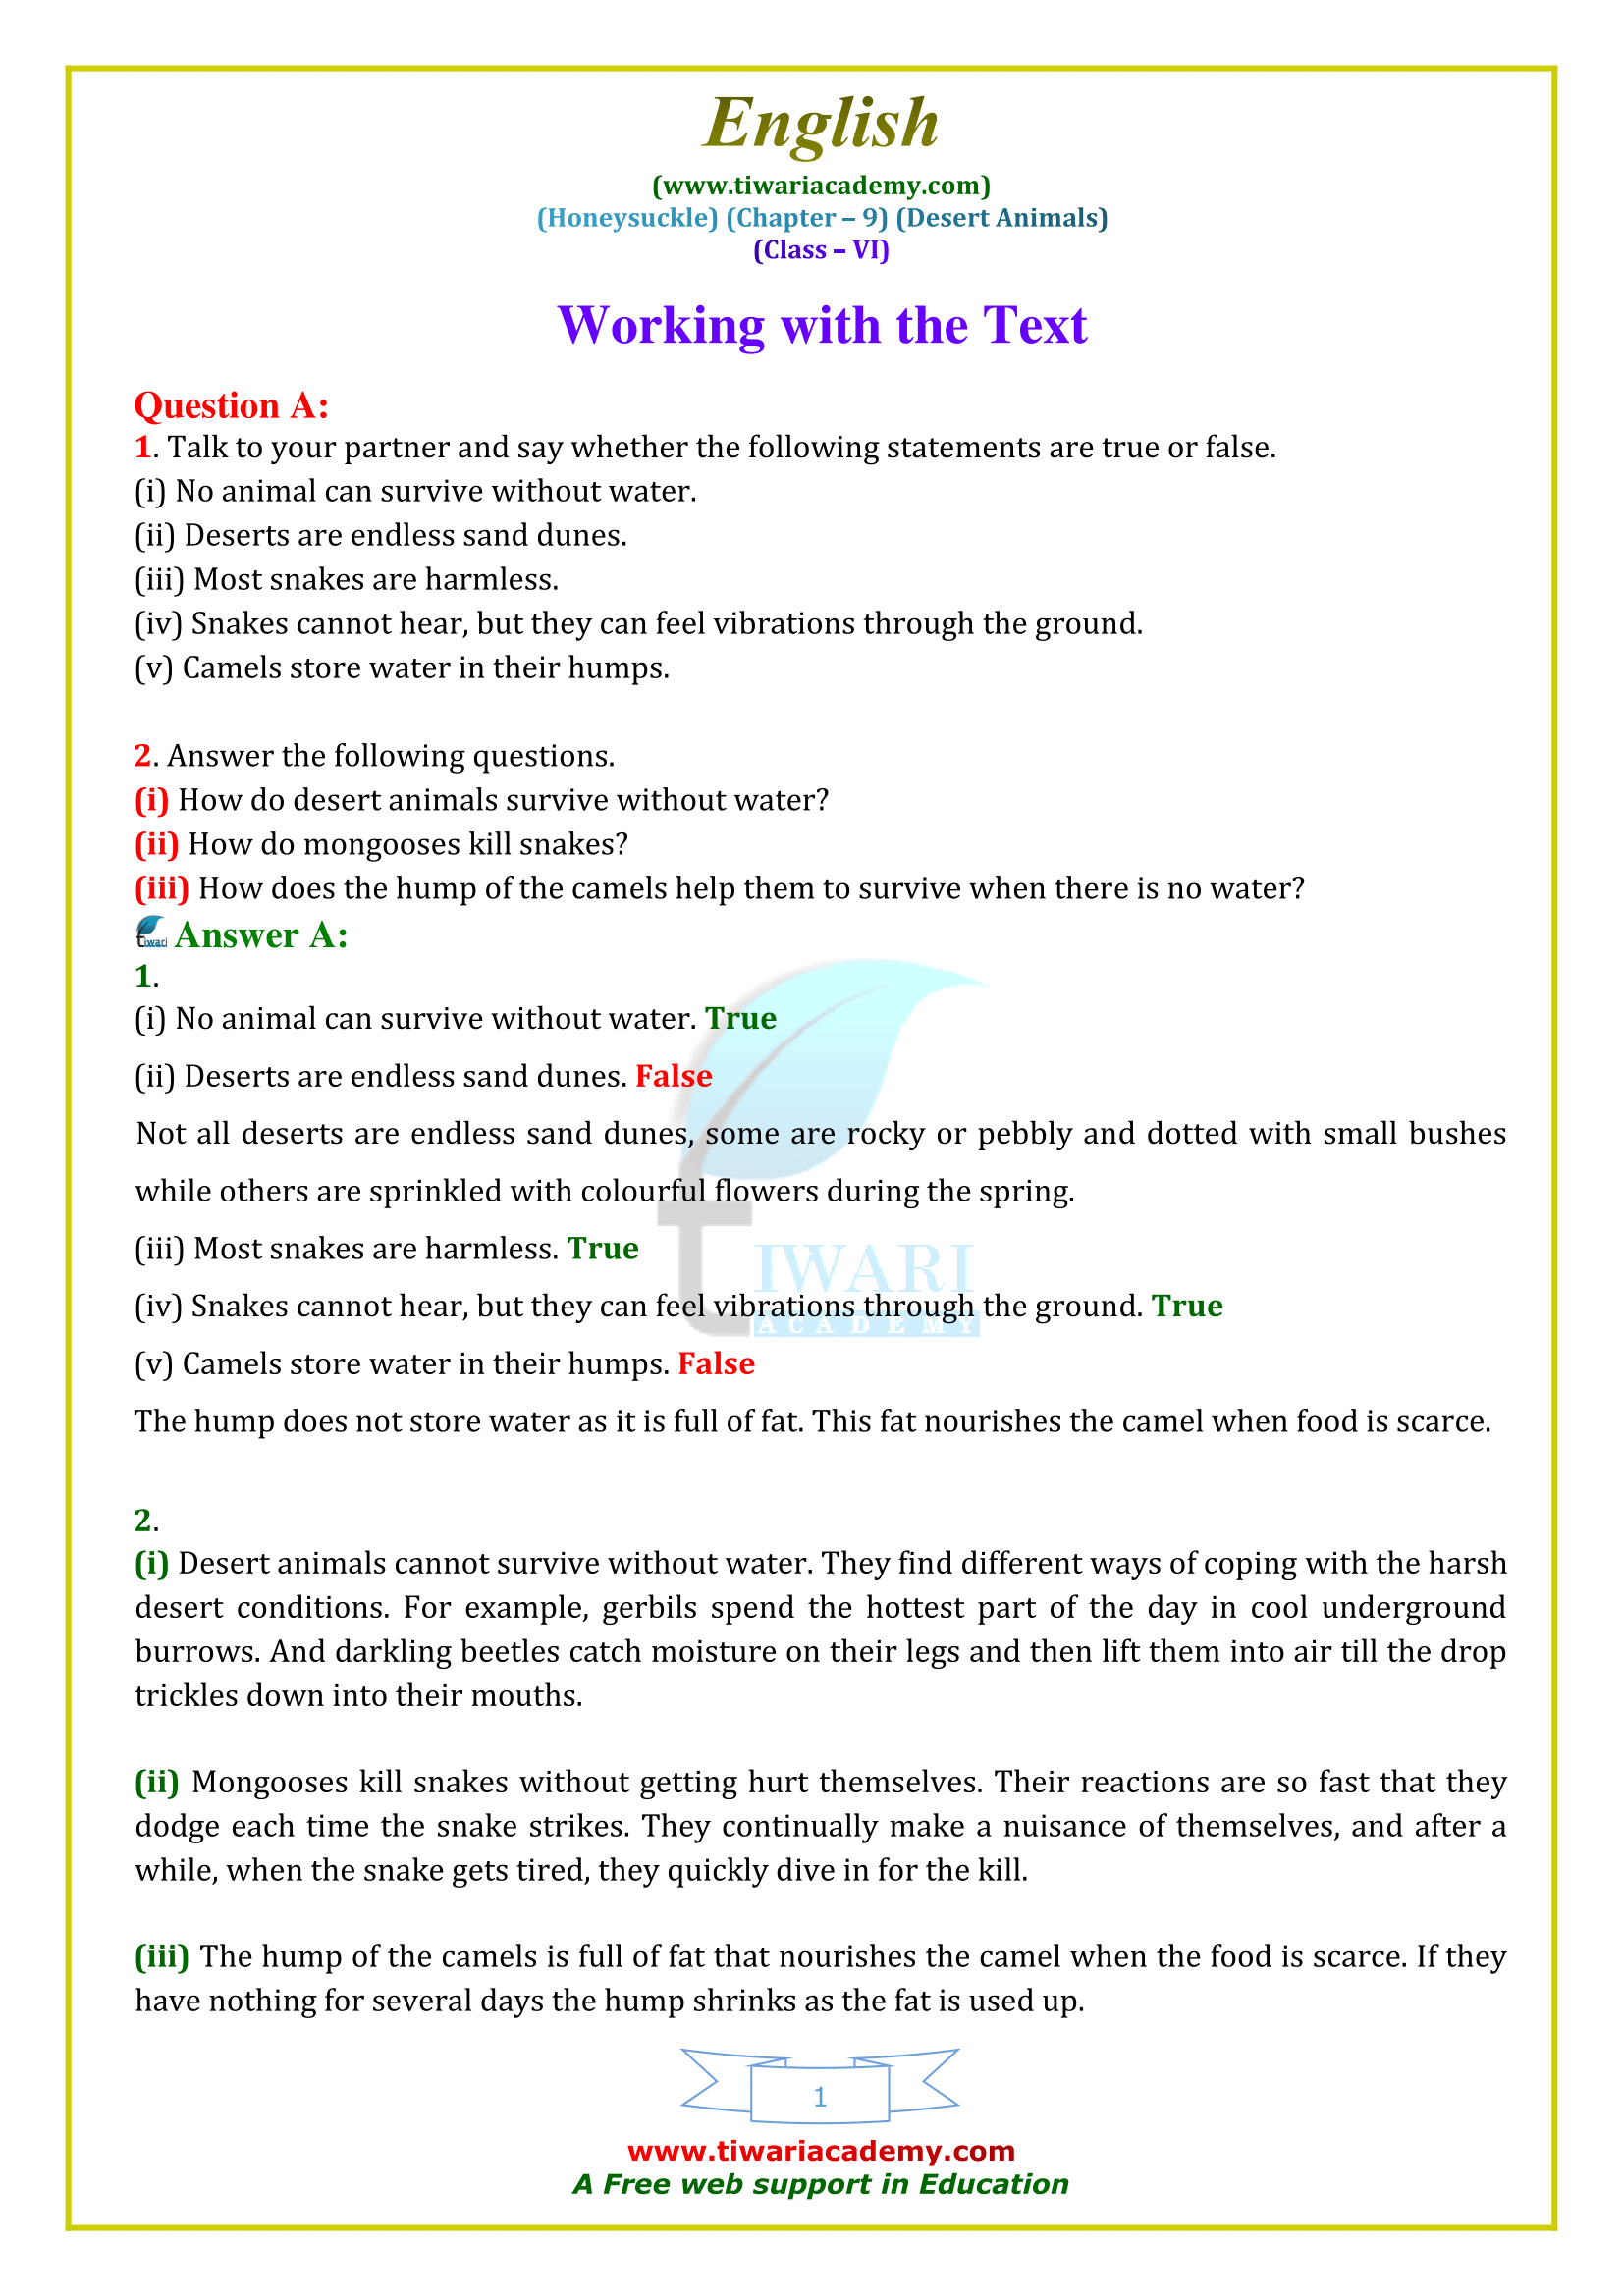 NCERT Solutions for Class 6 English Honeysuckle Chapter 9 Desert Animals